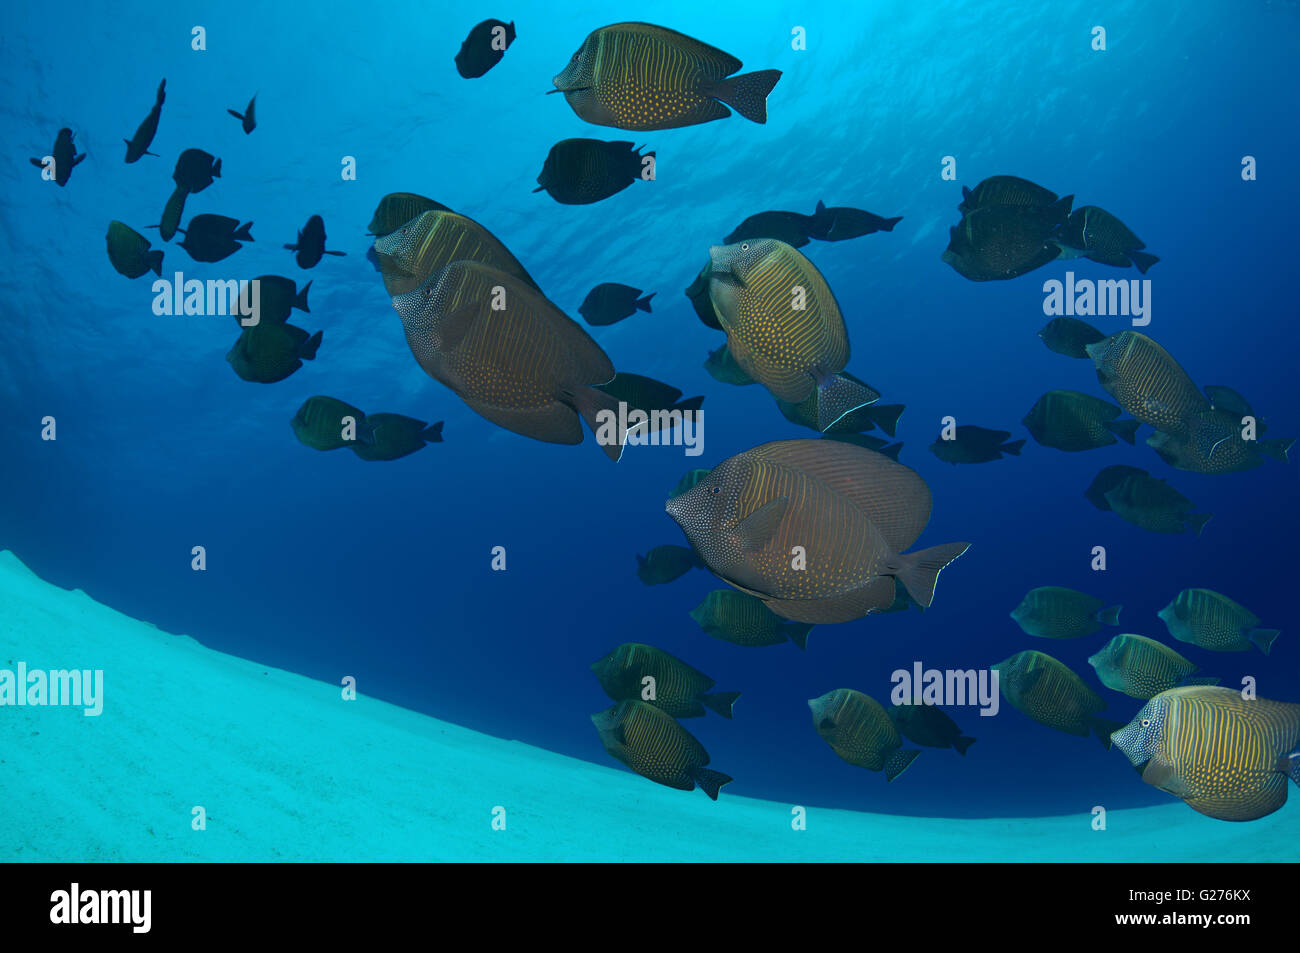 school of fish Red Sea Sailfin Tang, Indian sailfin tang or Desjardin's sailfin tang (Zebrasoma desjardinii) Stock Photo